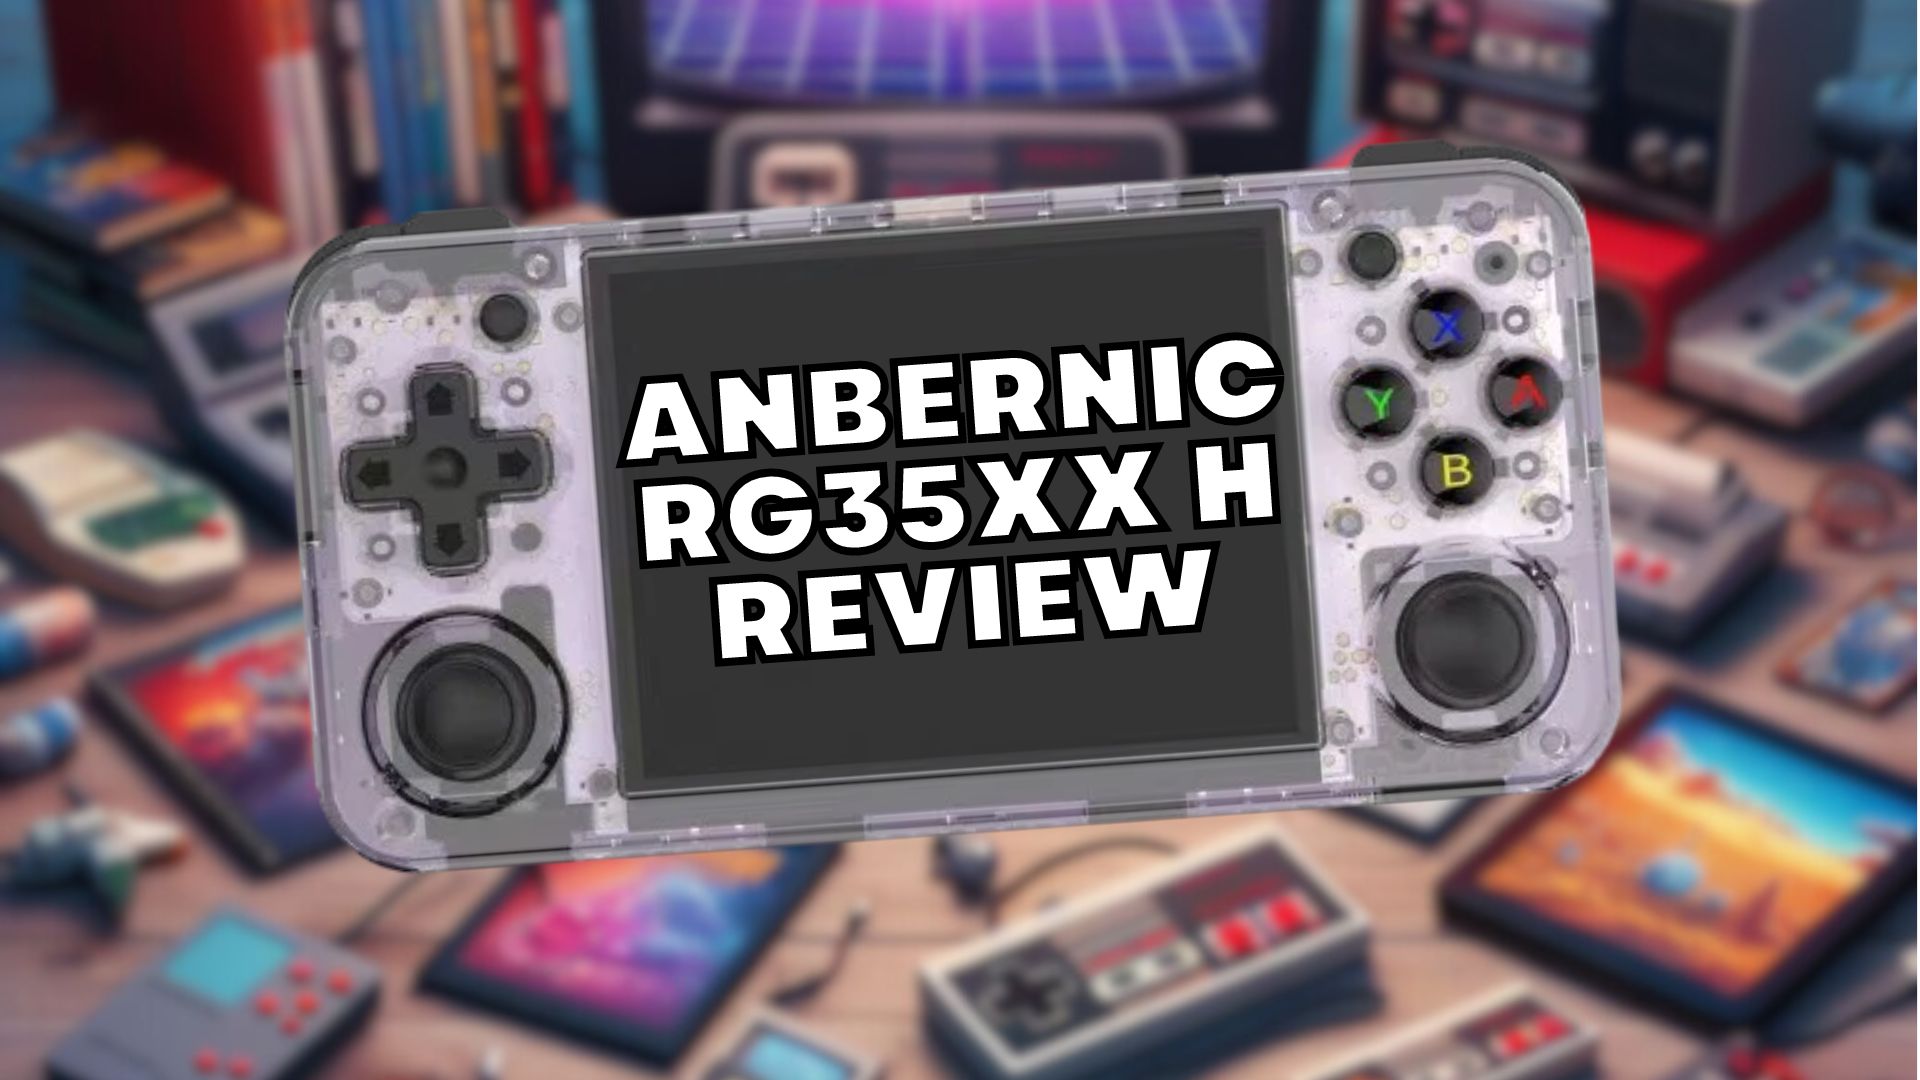 Anbernic RG35XX H Review met video - Geweldige budget retro gaming handheld